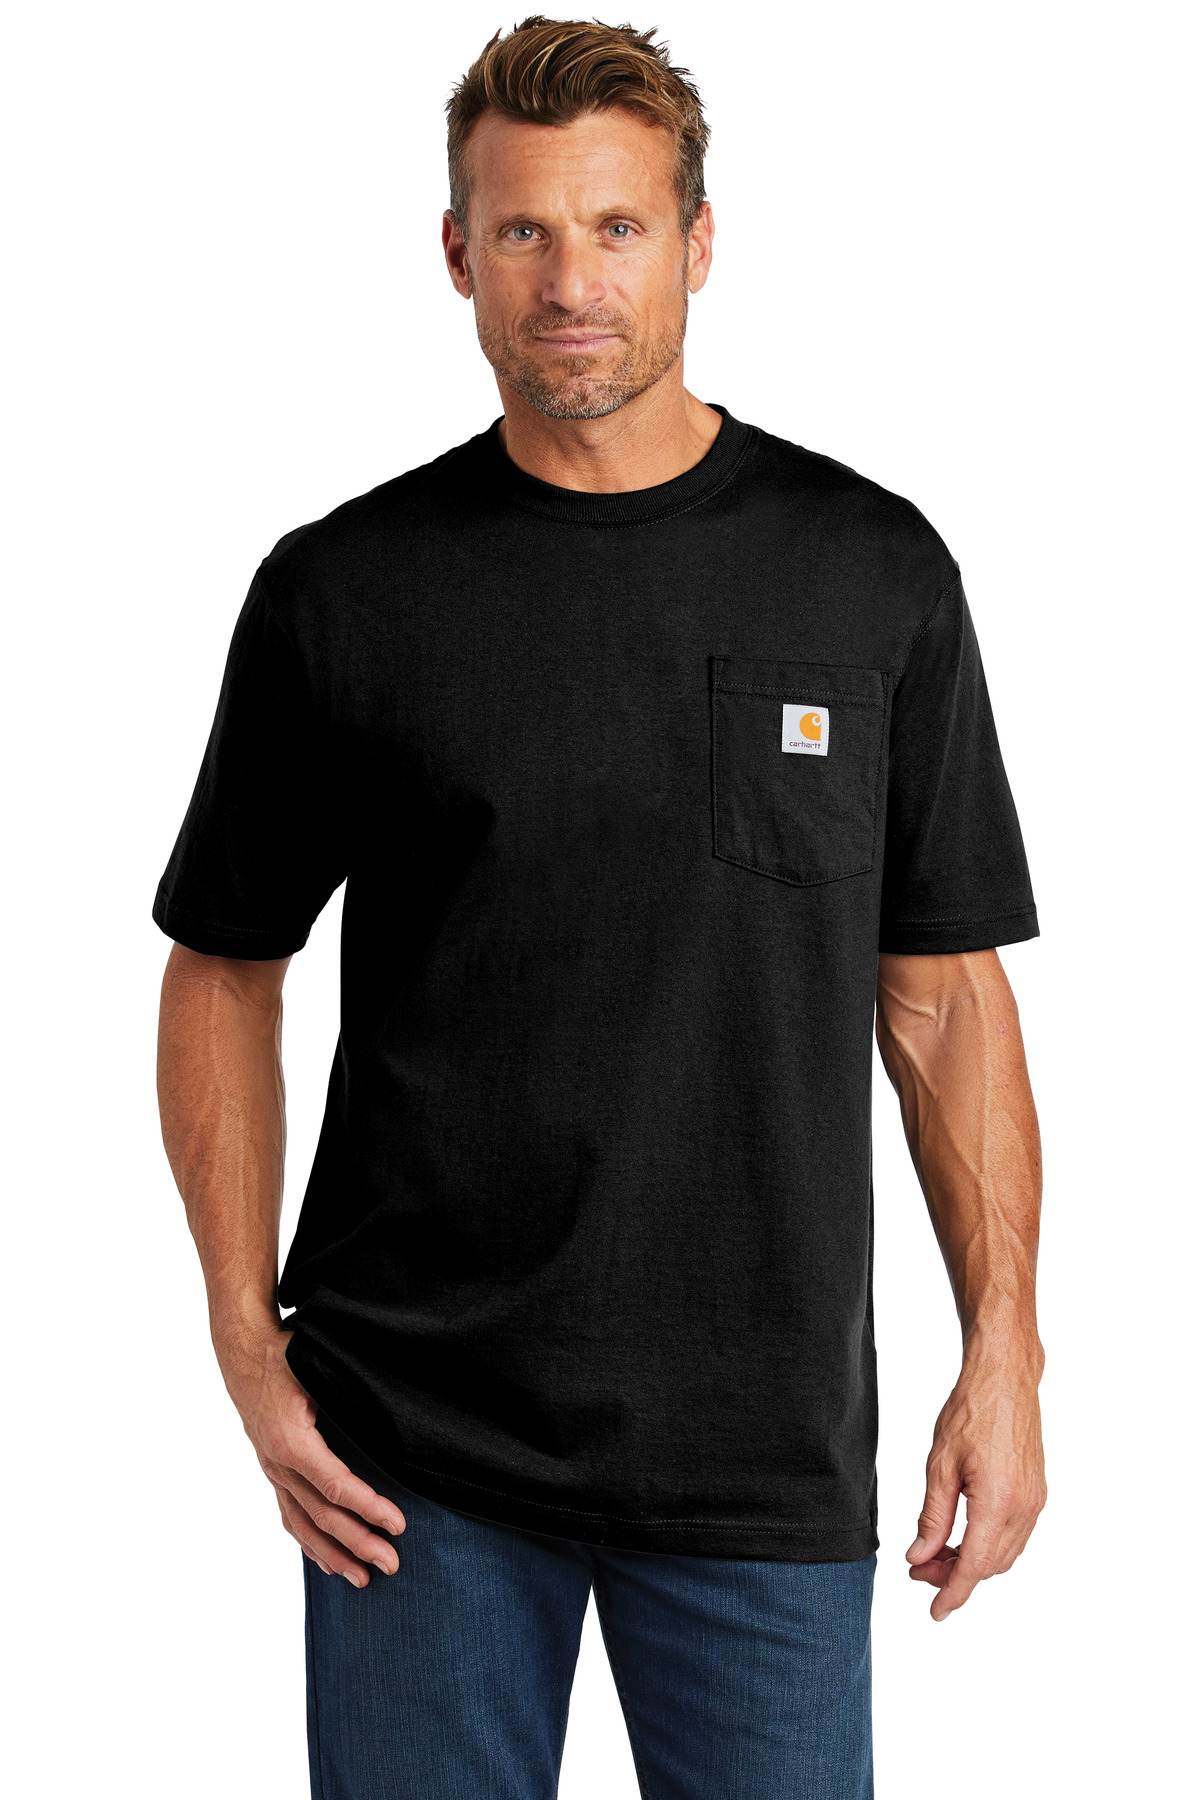 Carhartt Corporate Industrial TShirts,Tall Workwear ® Tall Workwear Pocket Short Sleeve T-Shirt.-Carhartt